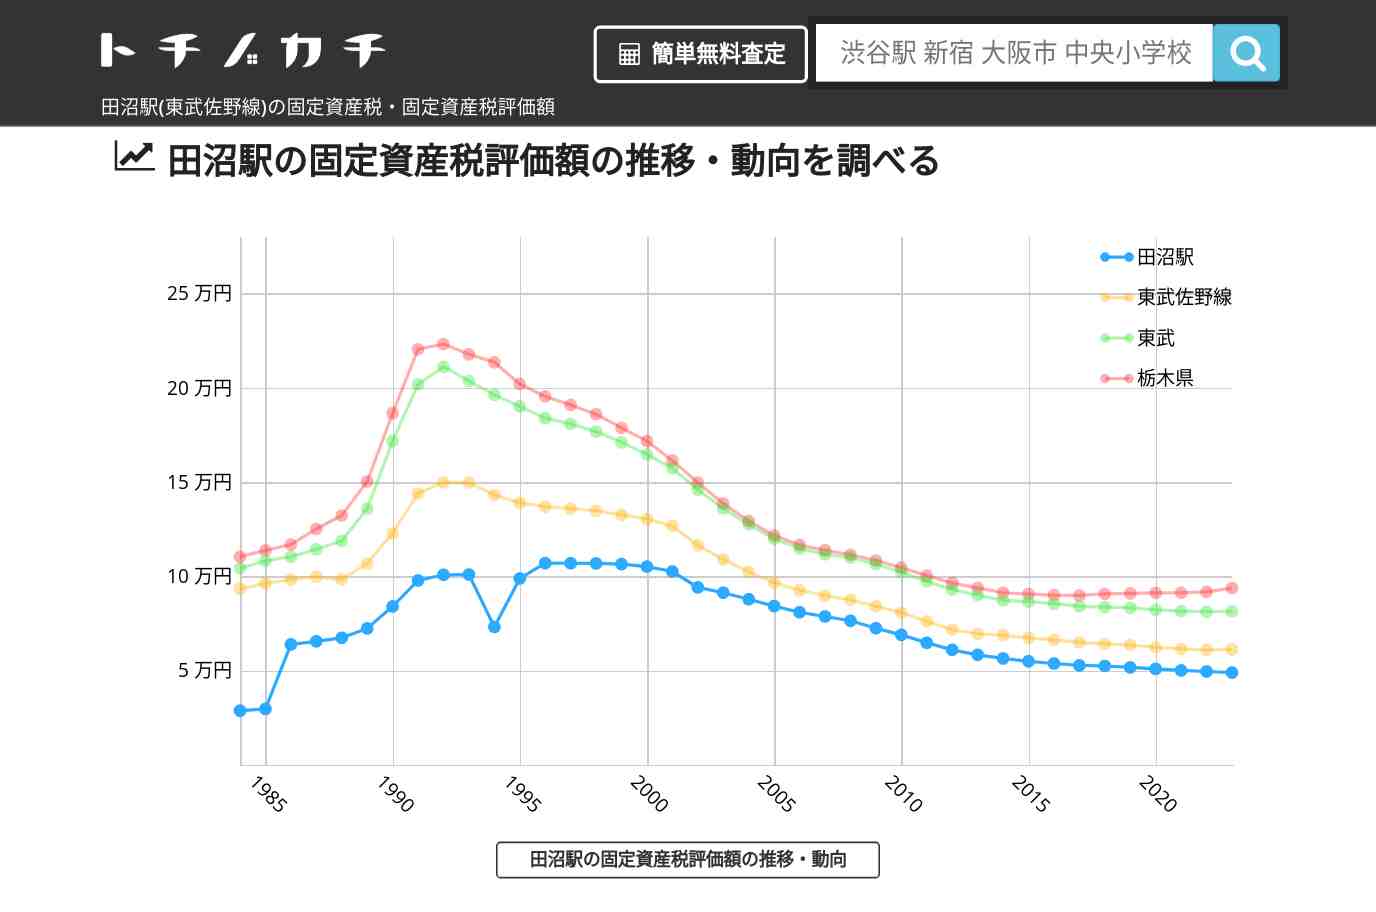 田沼駅(東武佐野線)の固定資産税・固定資産税評価額 | トチノカチ